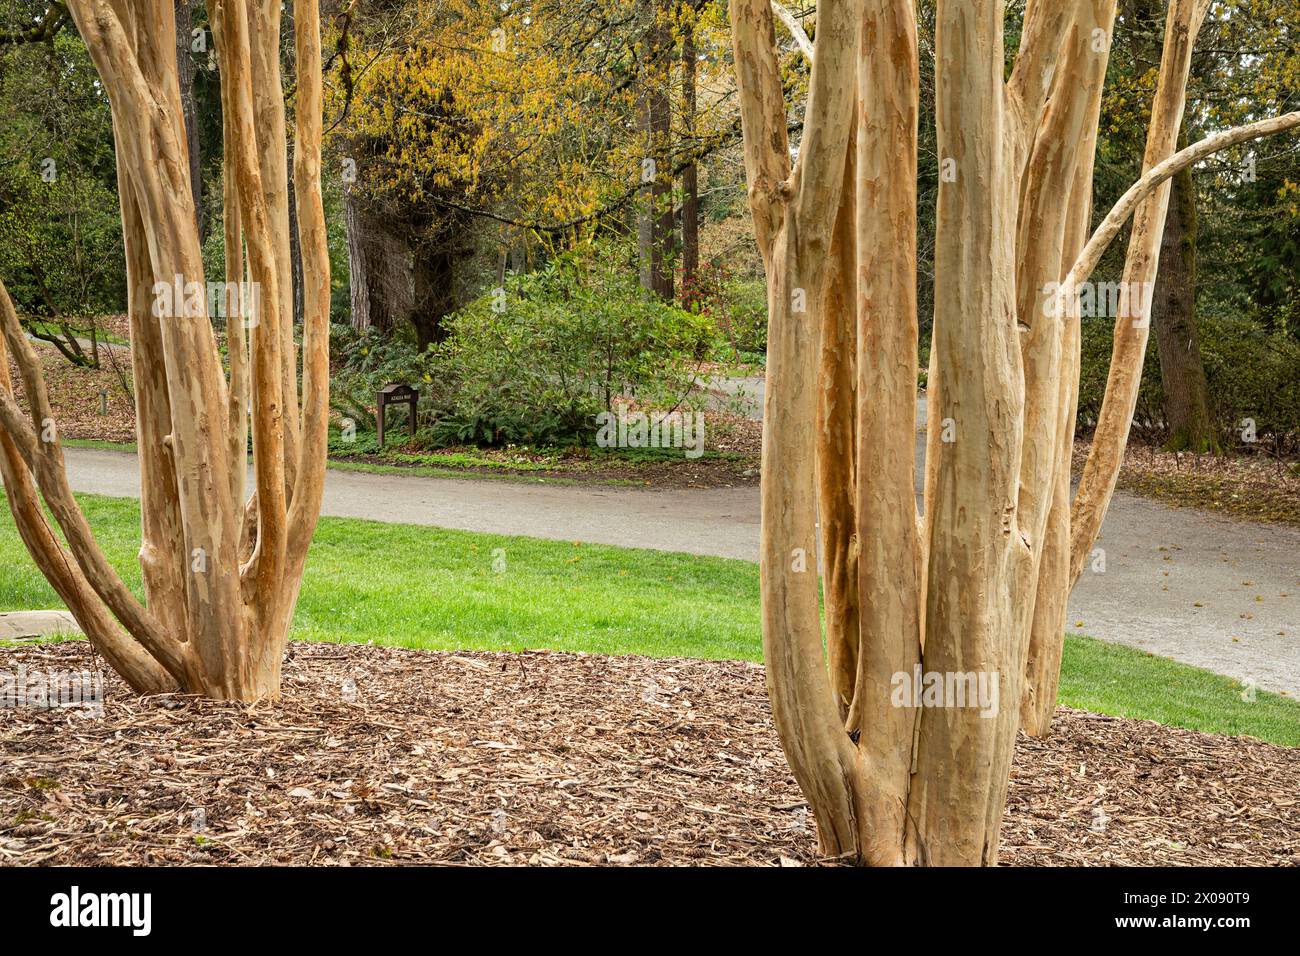 WA25141-00...WASHINGTON - Multiple tree trunks of a Muskogee Crape Myrtle located at the Washington Park Arboretum in Seattle. Stock Photo